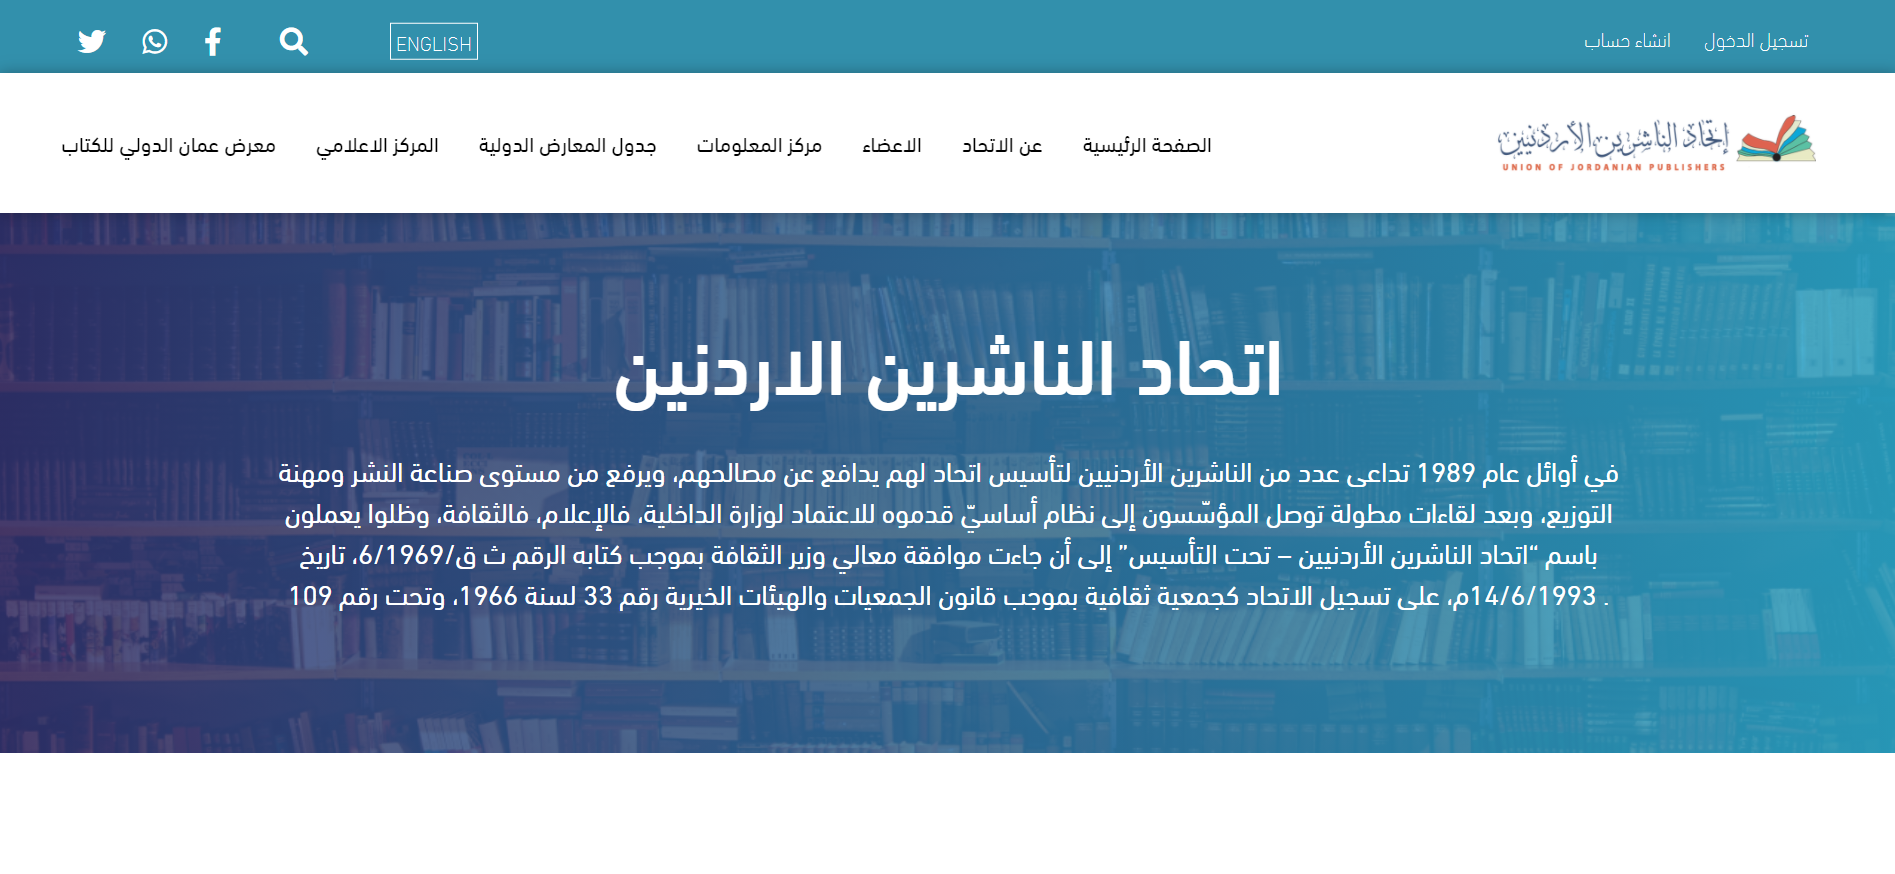 Jordanian Publishers Association